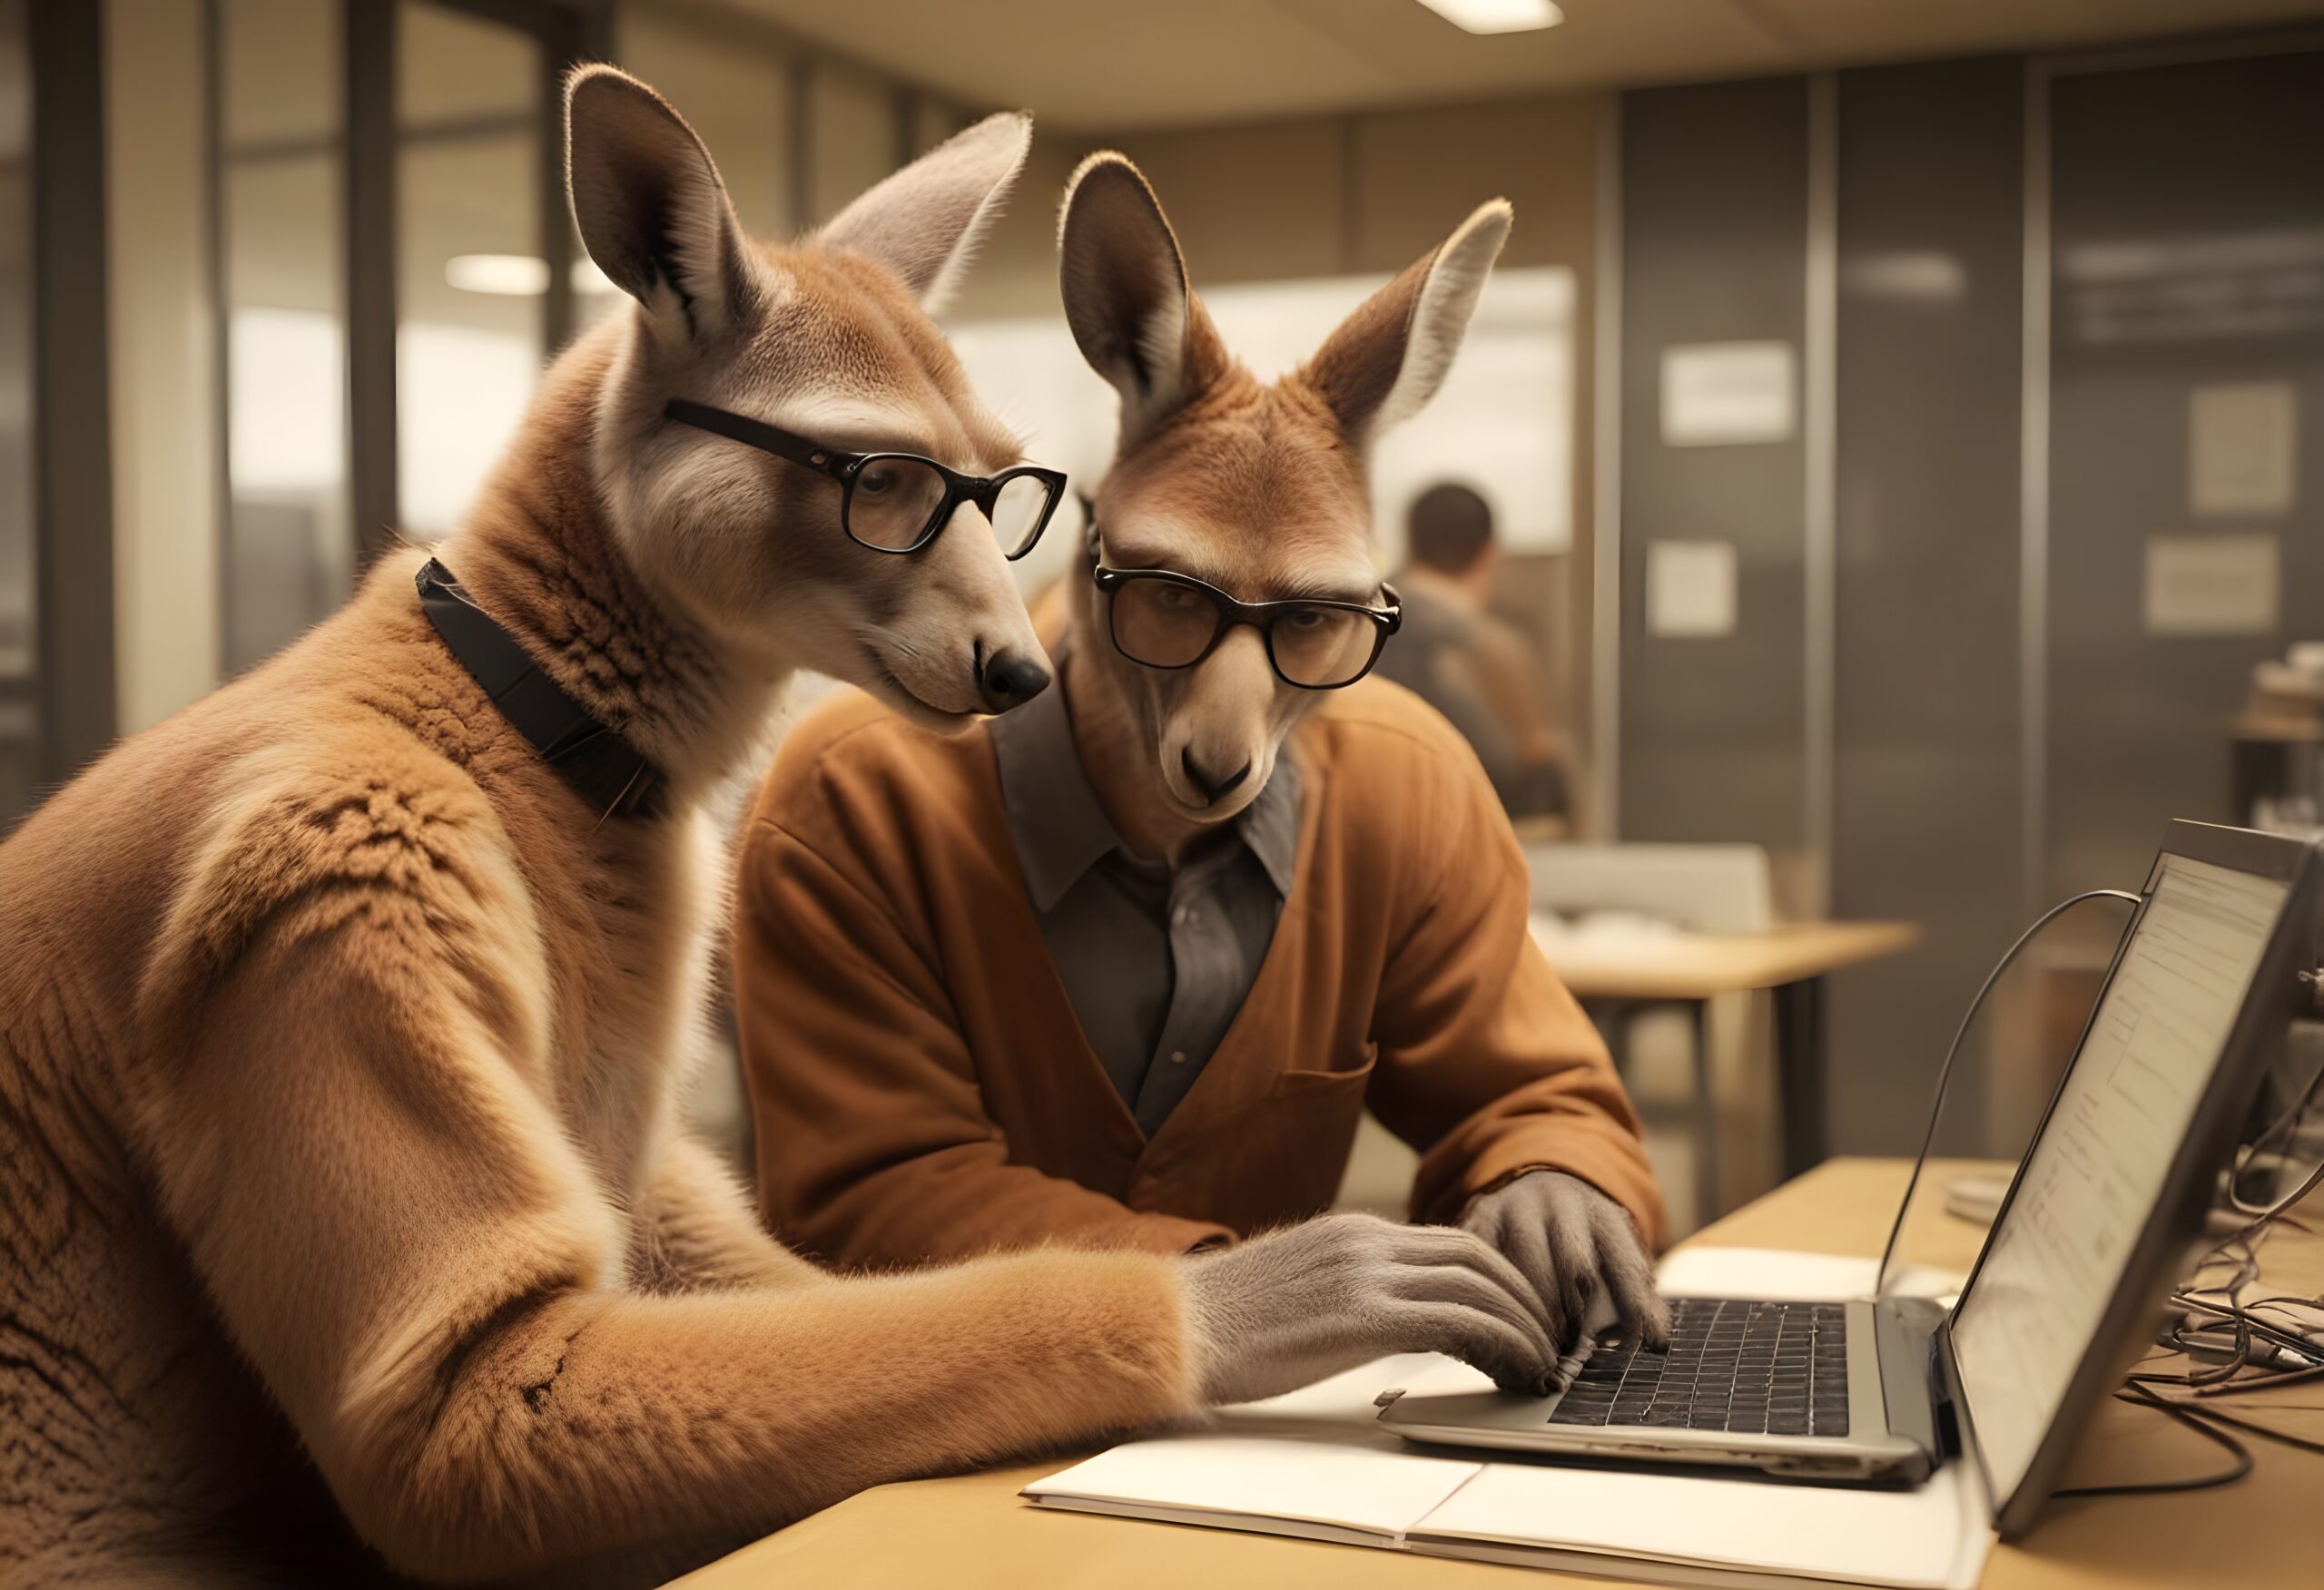 Kangaroo programador desenvolvedor suporte